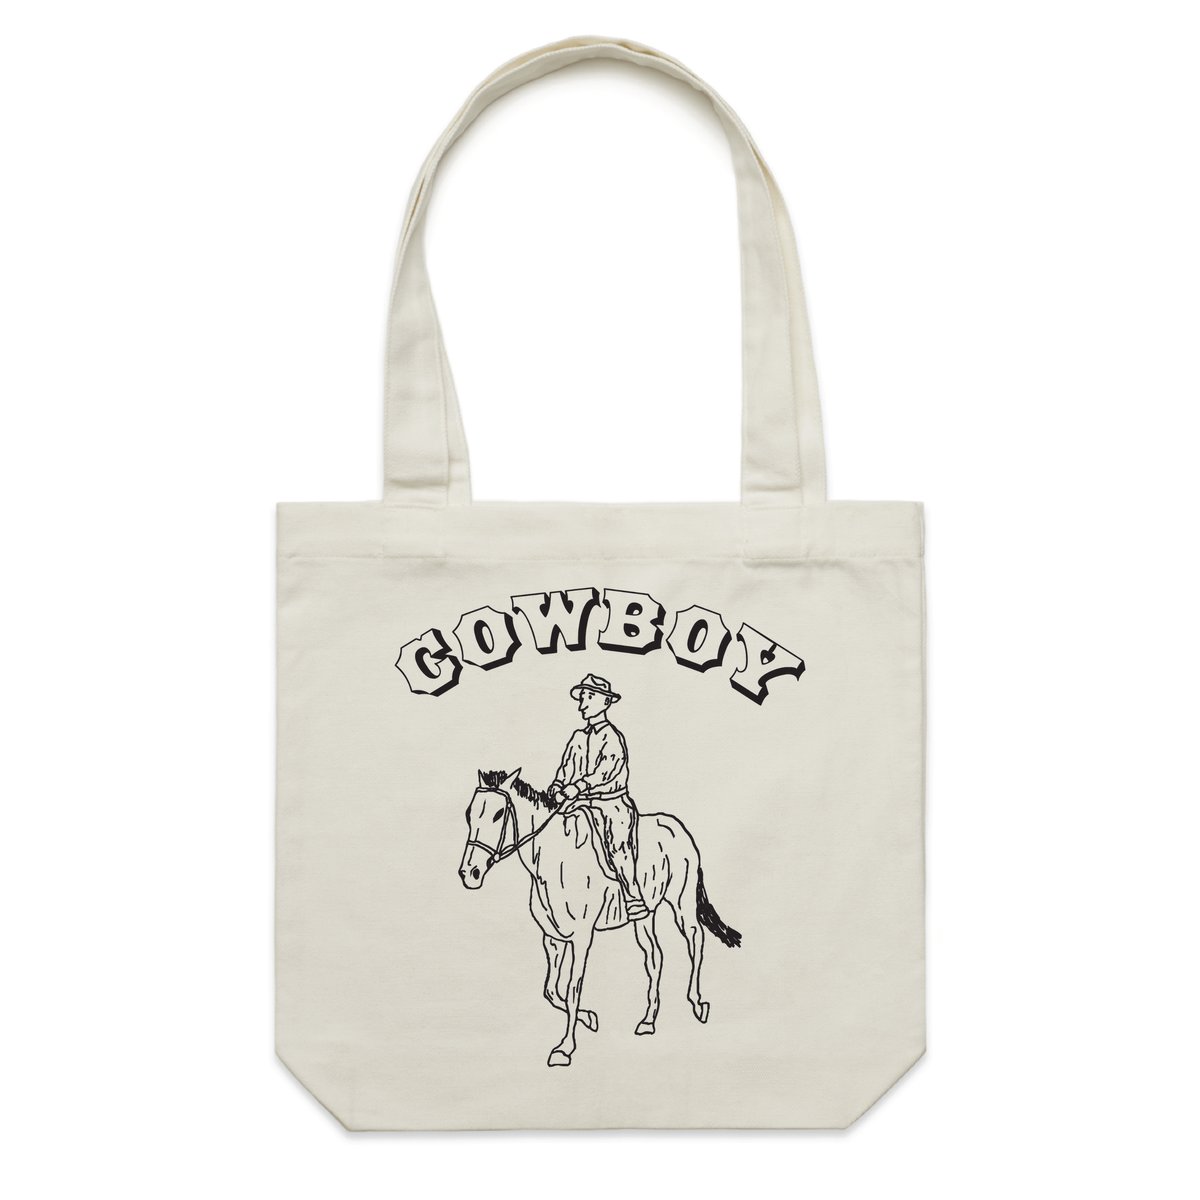 Image of "COWBOY" Cream Tote Bag